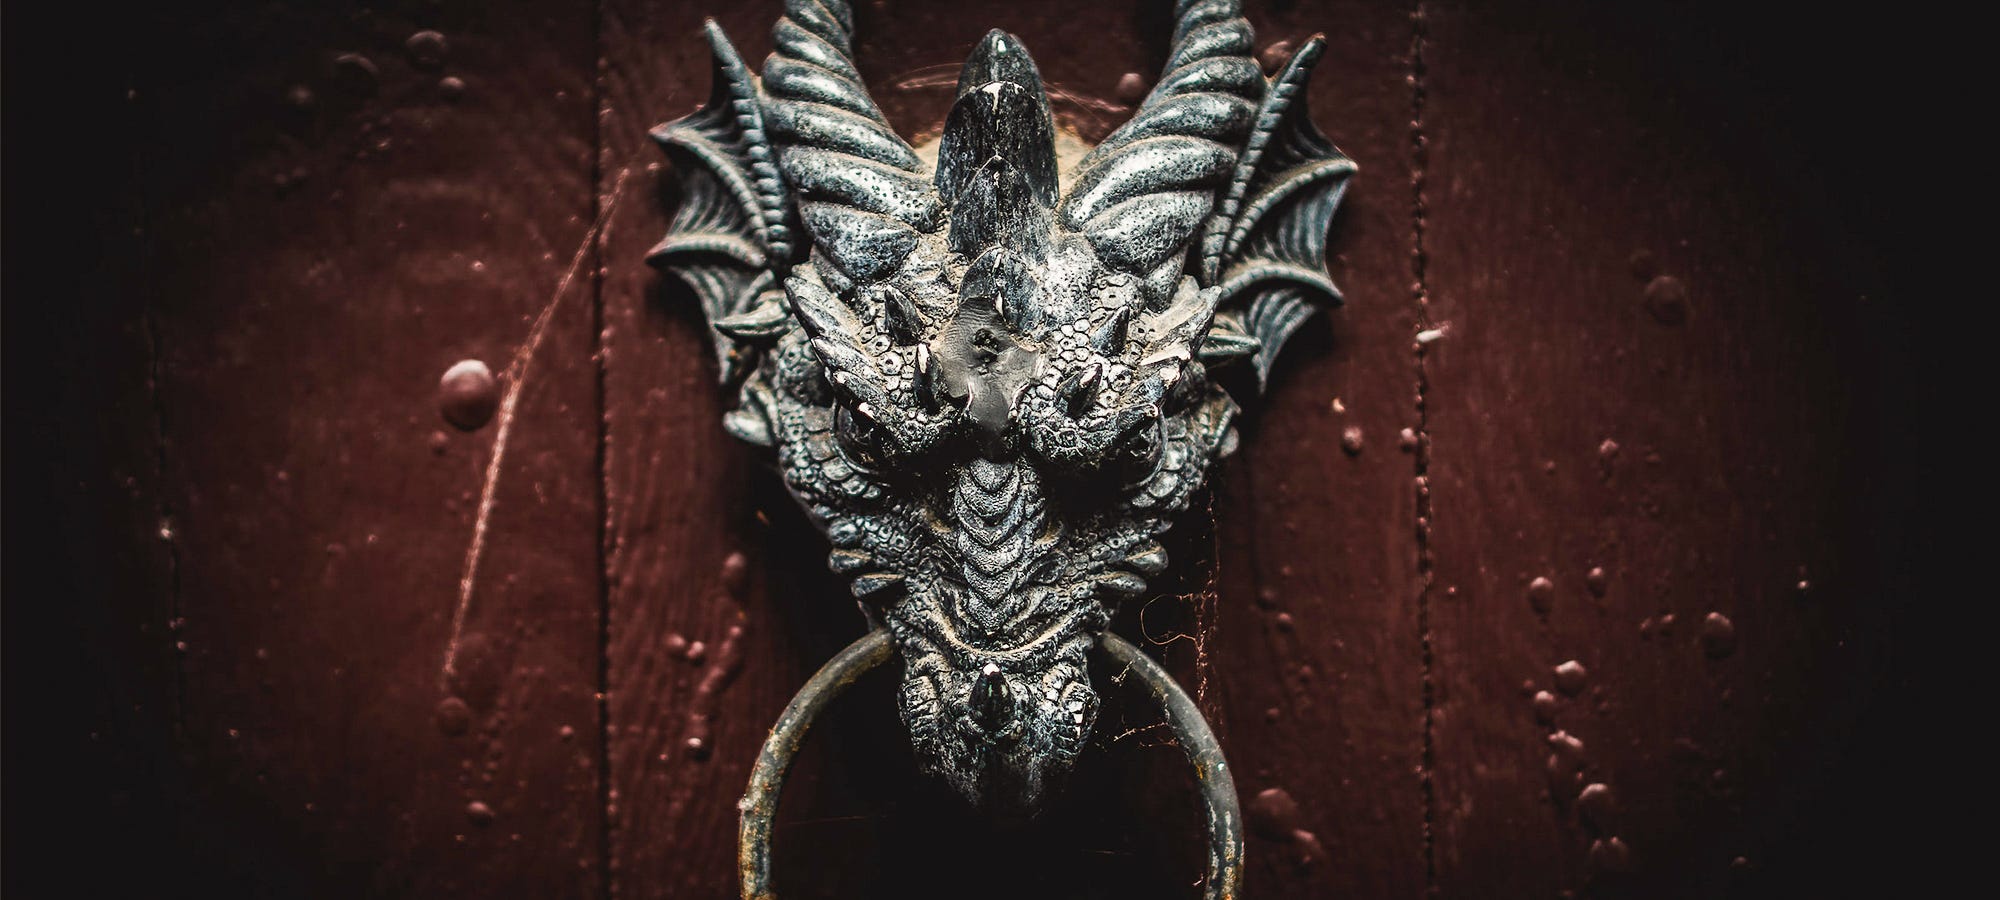 Dragon doorknob. (Photo by Jonathan Kemper on Unsplash)